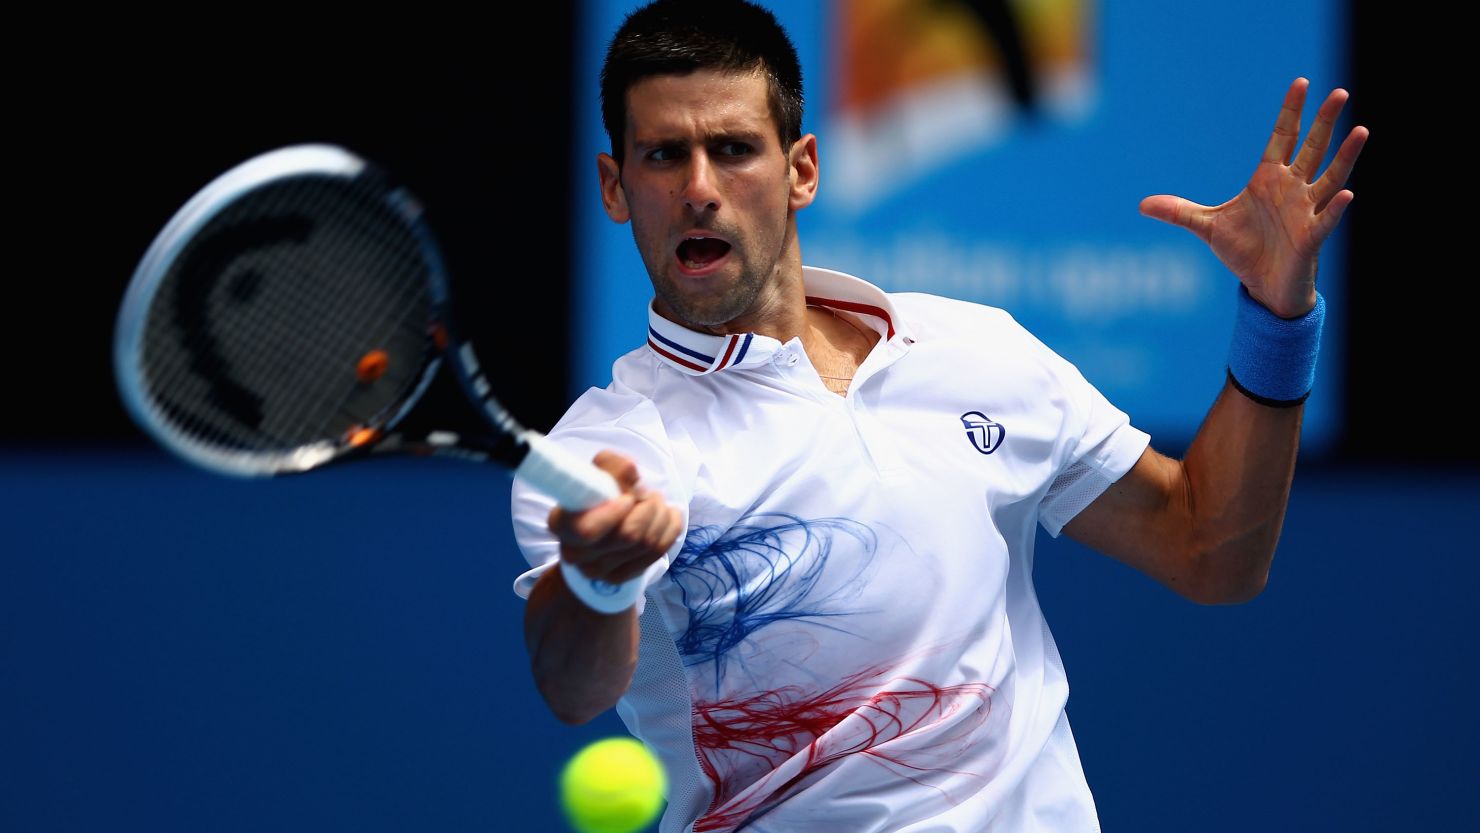 Serbia's Novak Djokovic powered through his third round match beating France's Nicolas Mahut 6-0 6-1 6-1.